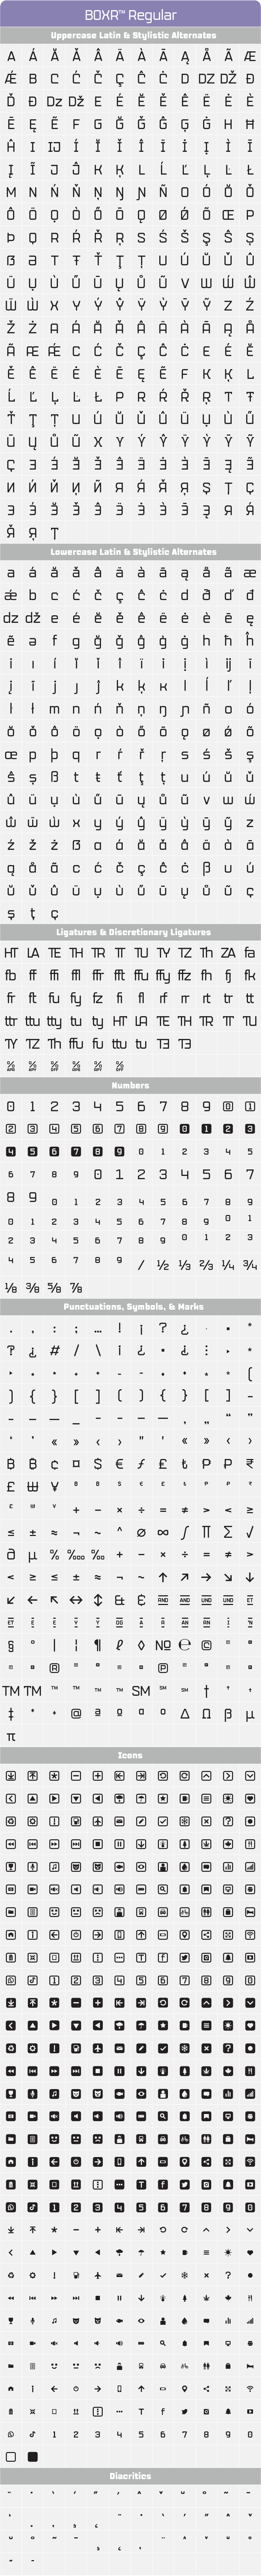 Boxr-Fonts-Regular-Glyph-Tables.png